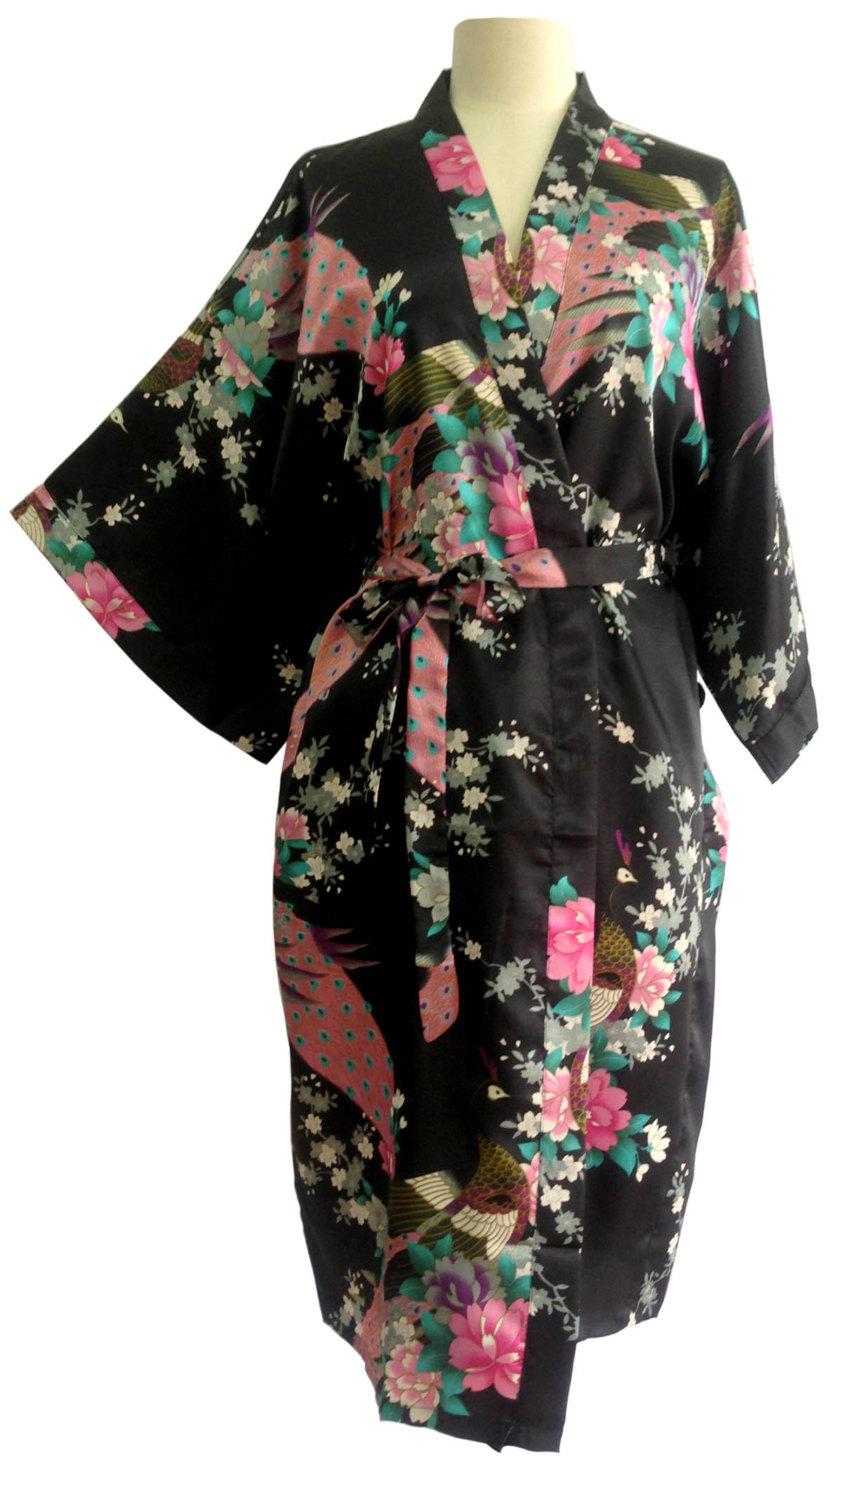 Hochzeit - On Sale Kimono Robes Bridesmaids Silk Satin Black Colour Paint Peacock Design Pattern Gift Wedding dress for Party Free Size